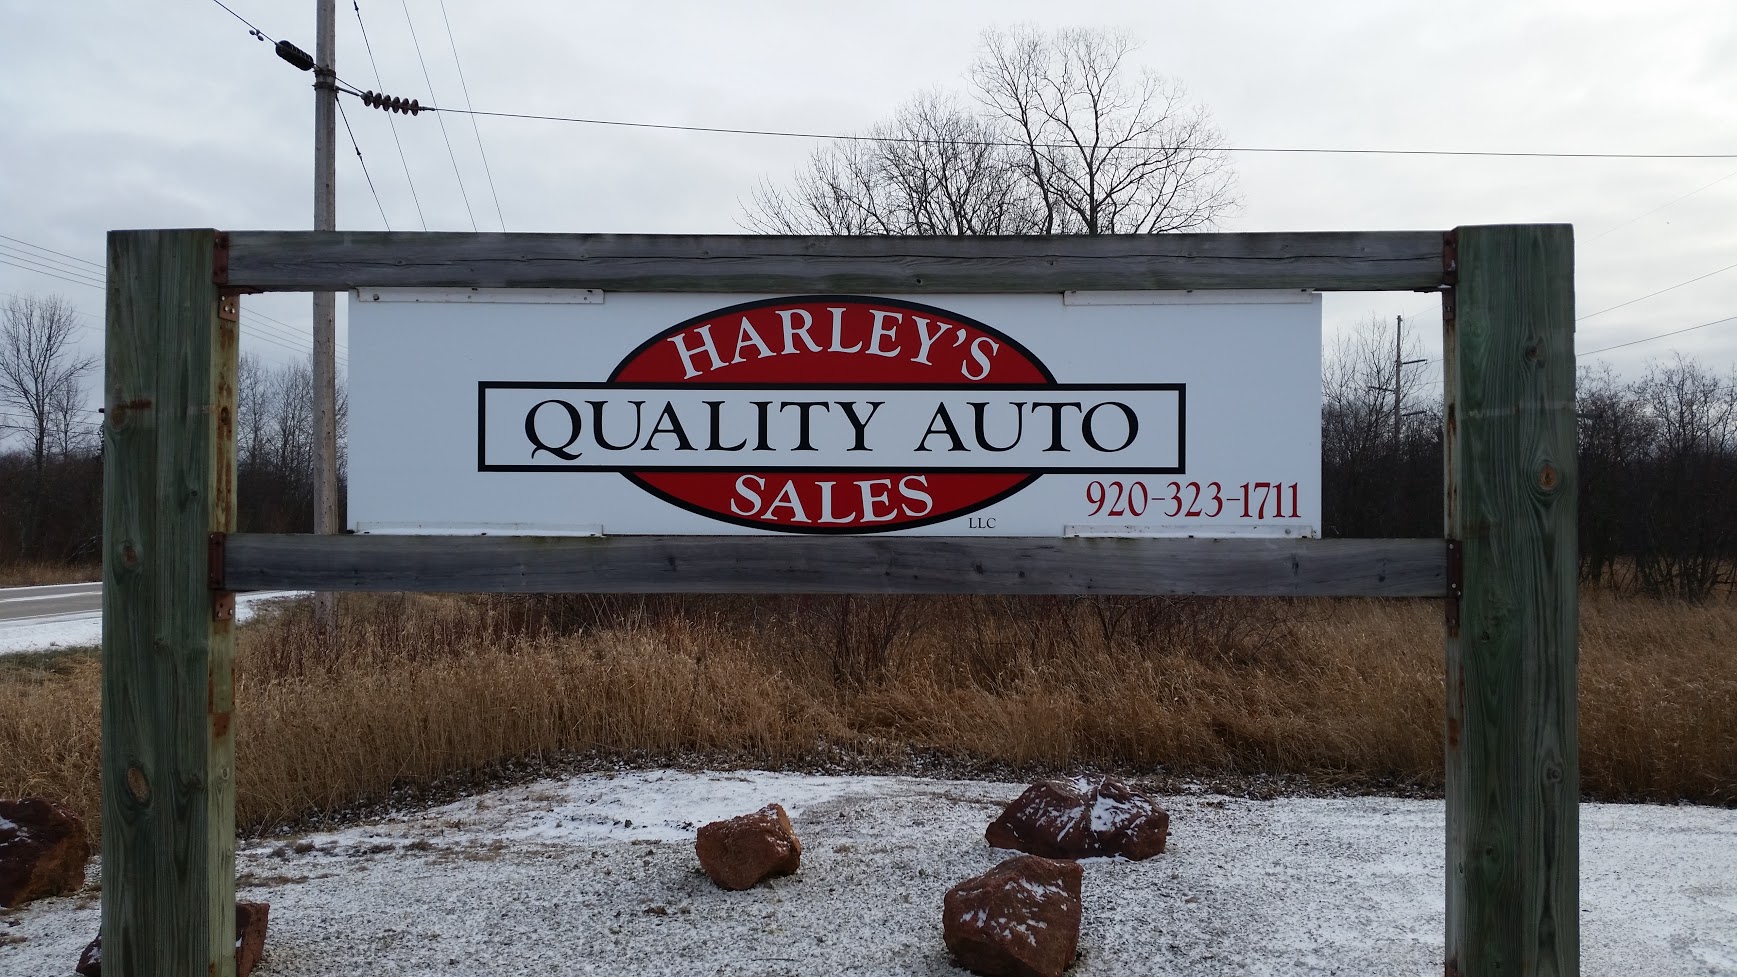 Harley's Quality Auto Sales